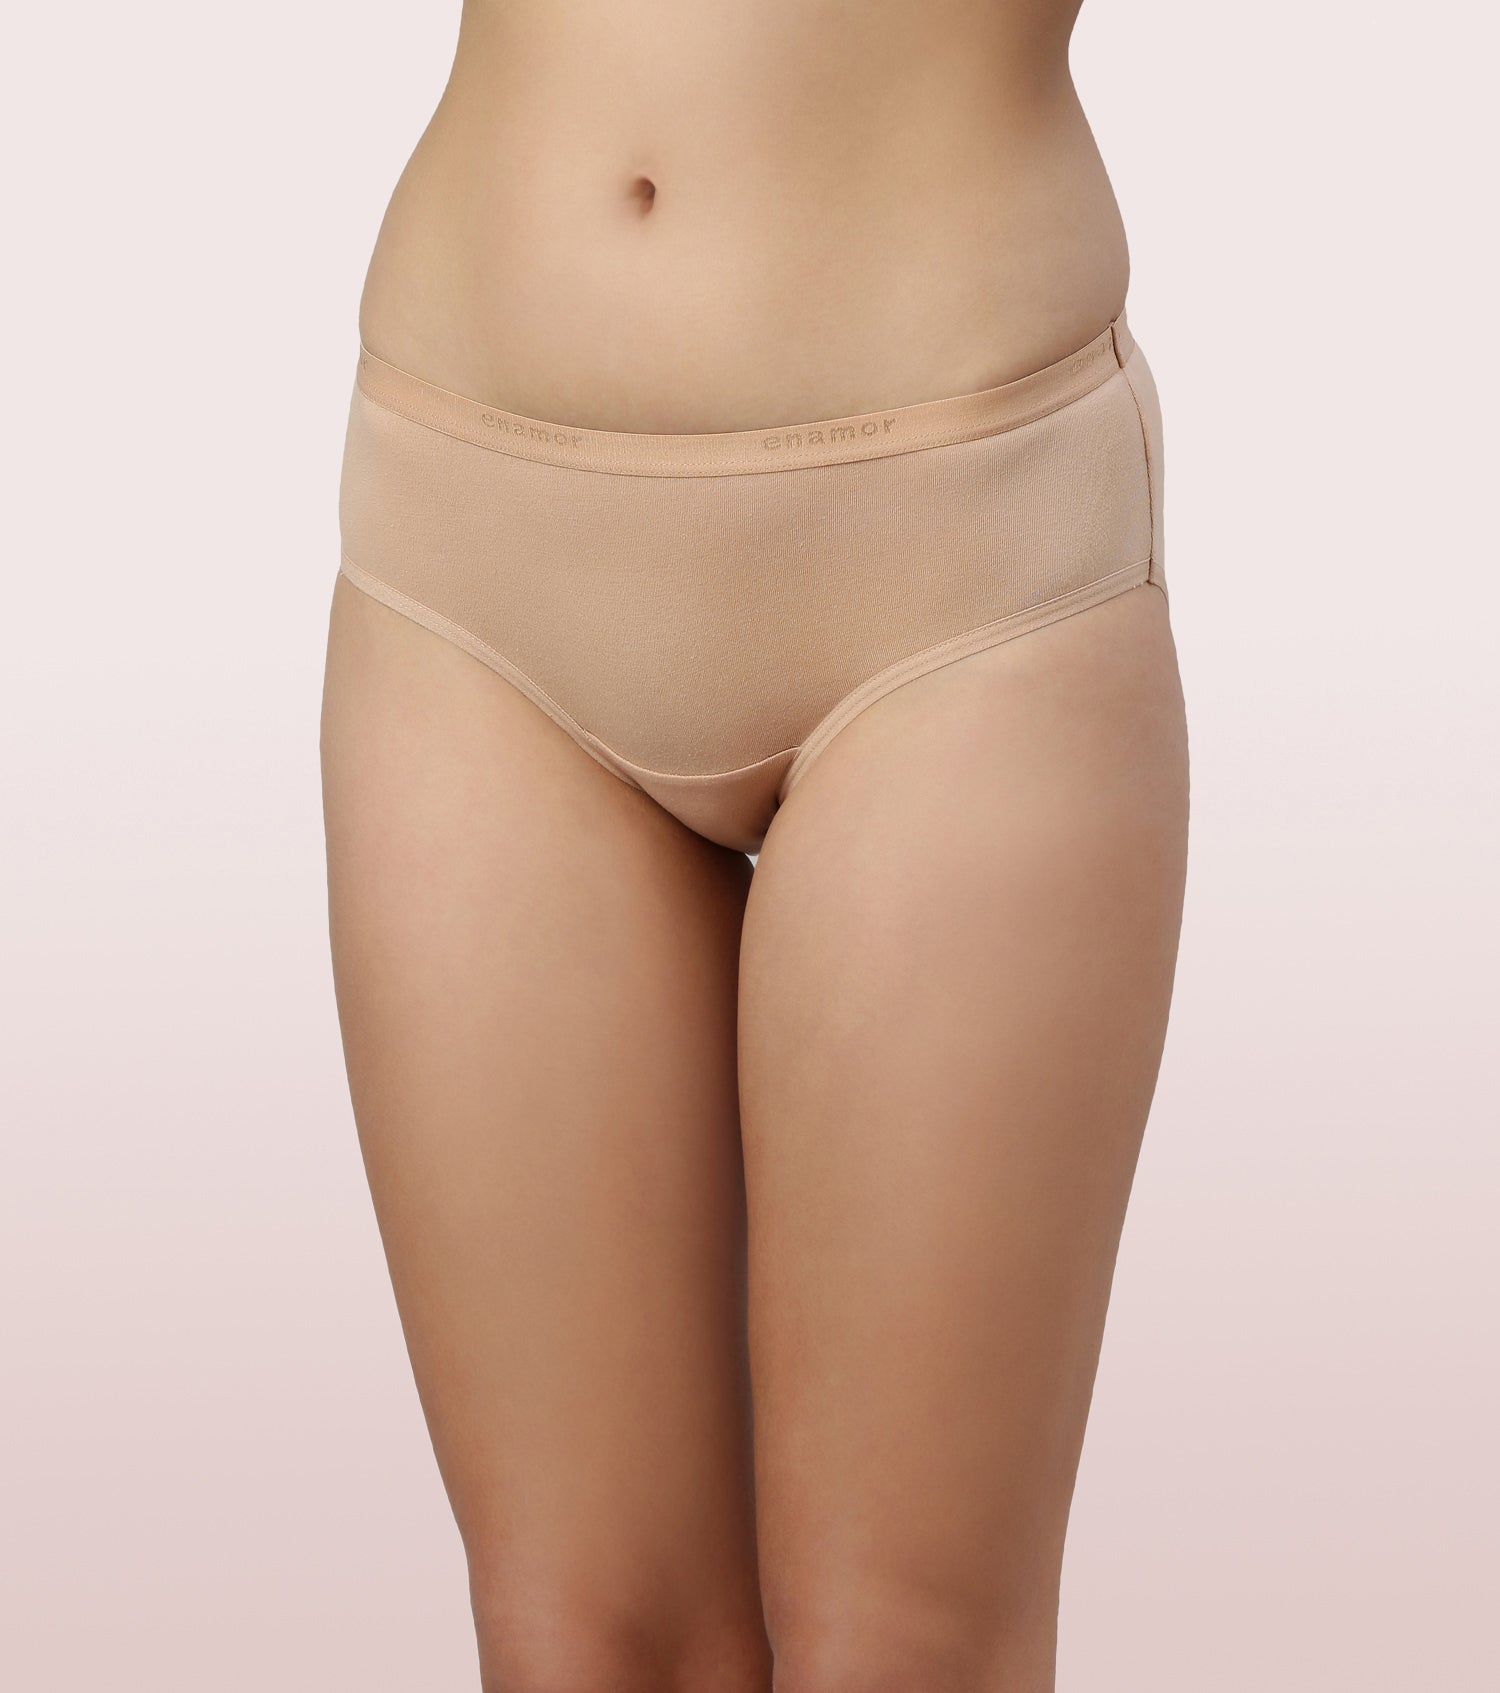 Buy Enamor CR17 Mid Waist Cotton Panty-Pack Of 3 - Multicolor online